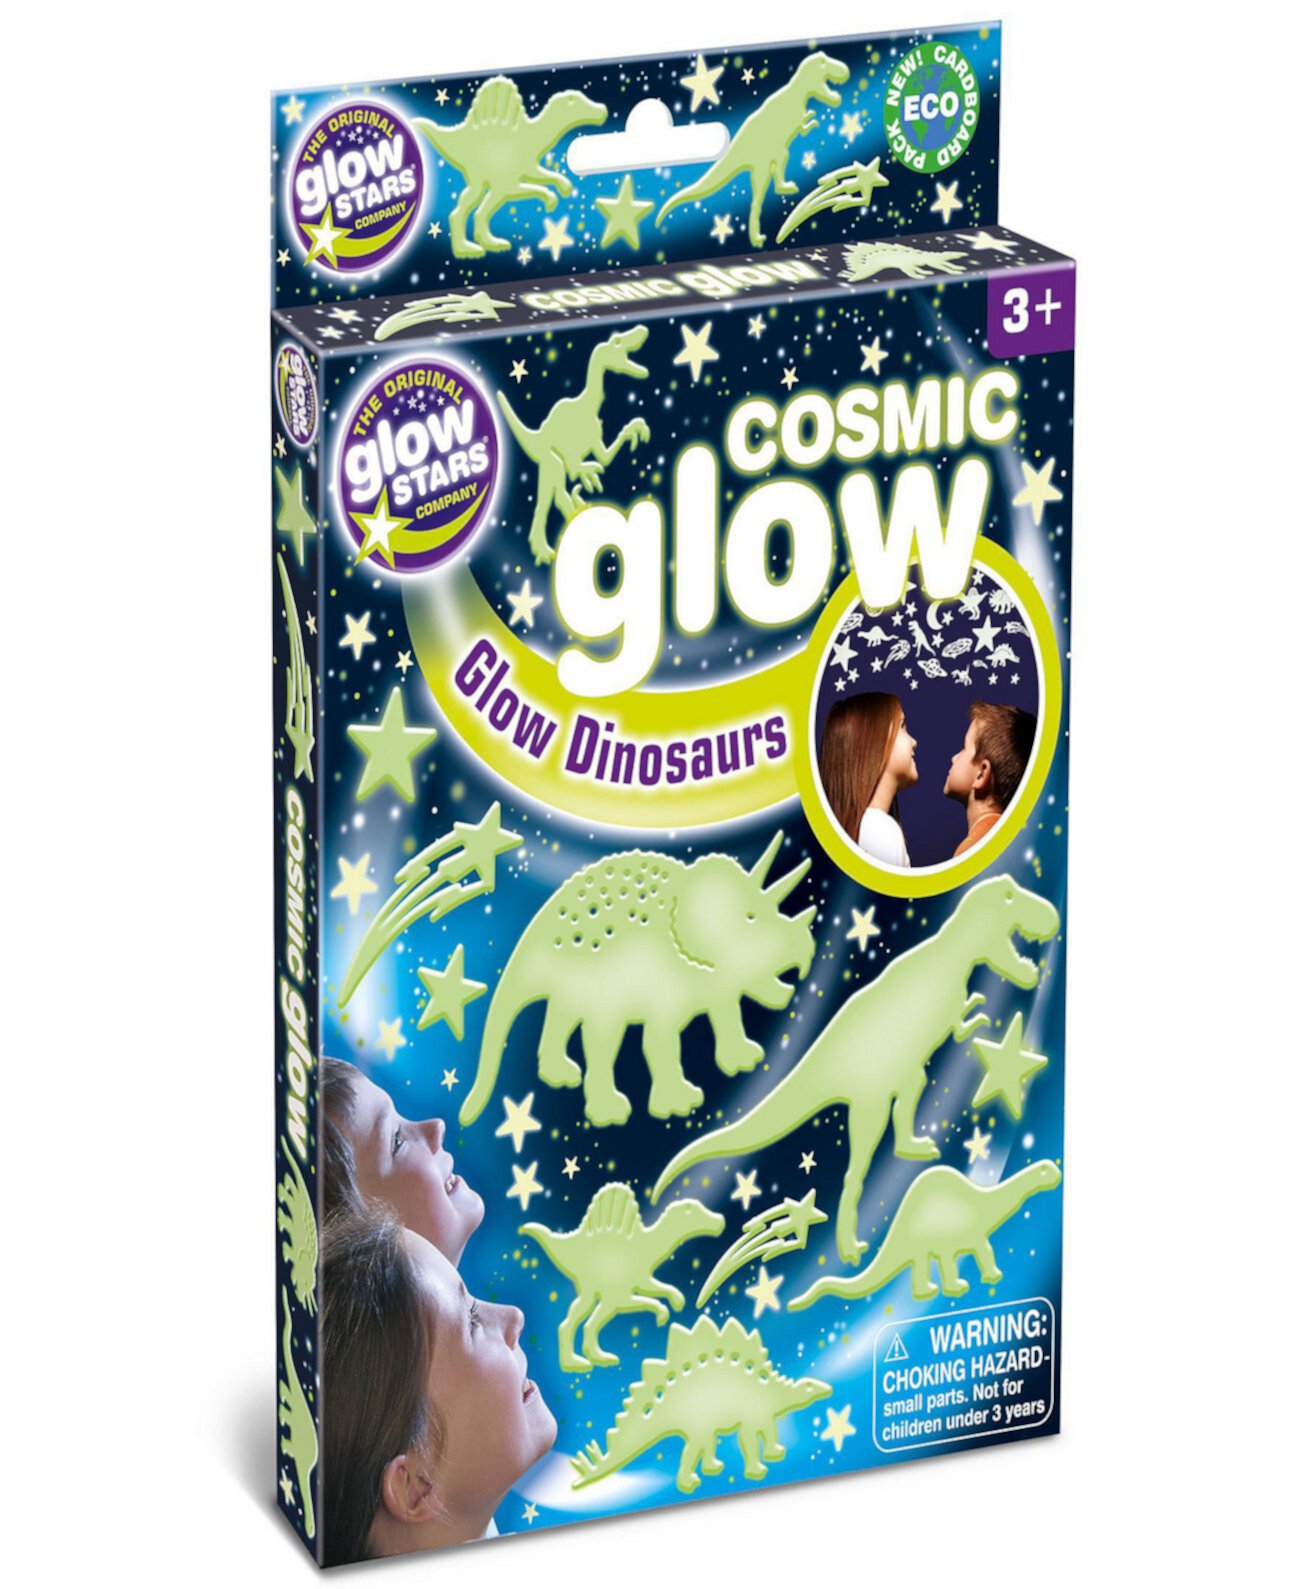 The Original Glowstars Cosmic Glow Dinosaurs Craft Kit Brainstorm Toys